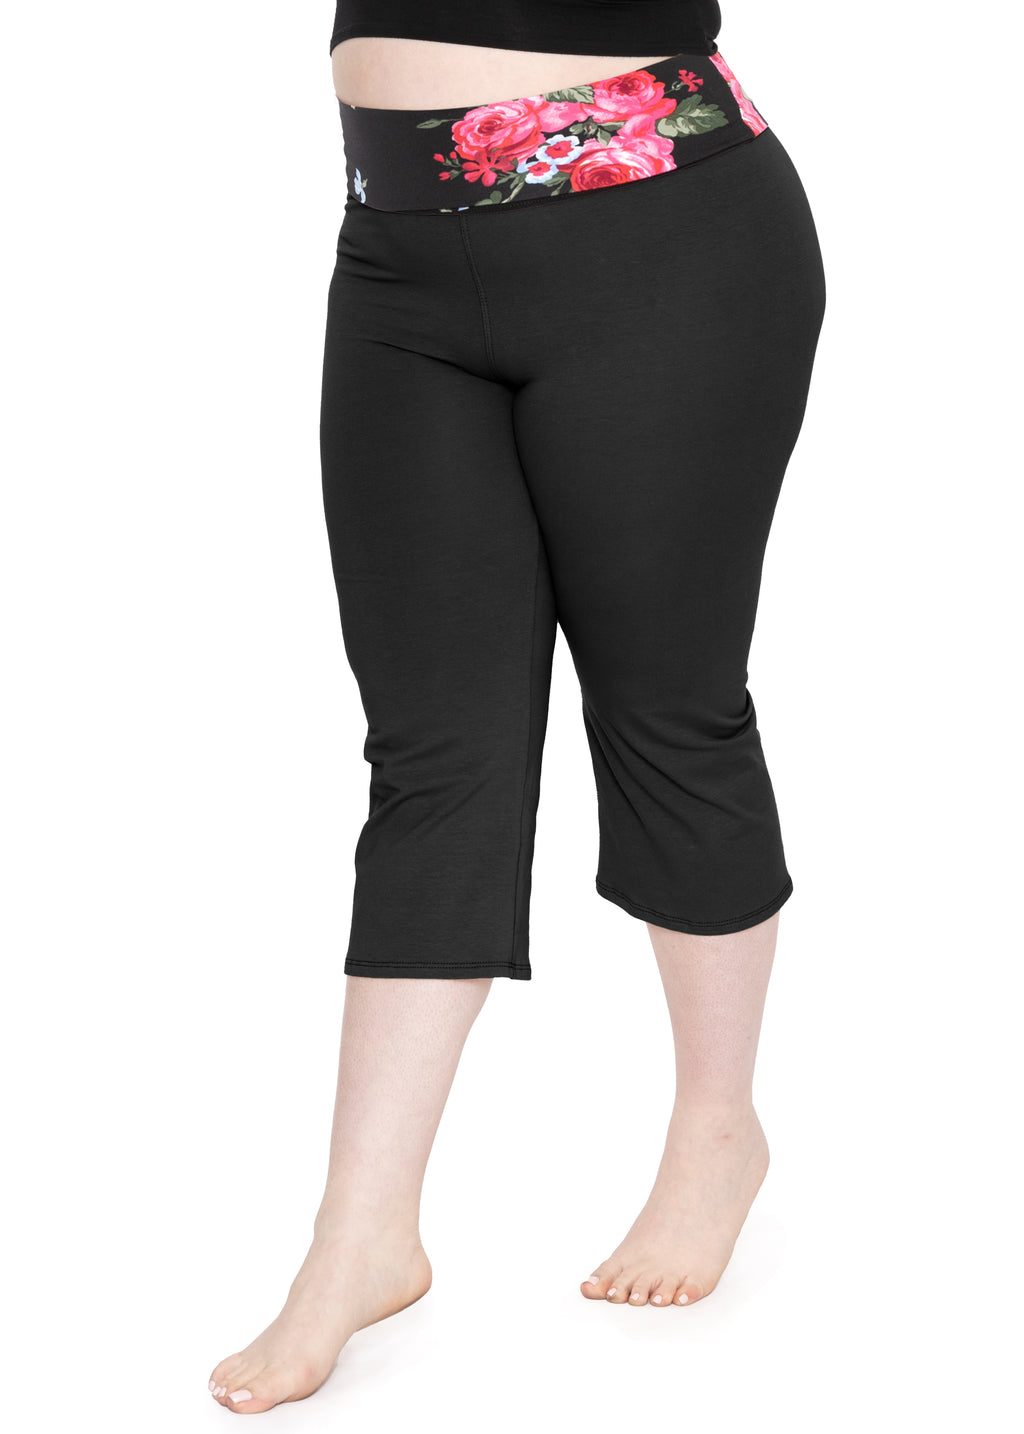 Plus Size Capri Leggings for Women Yoga Bottom Capris Pants High